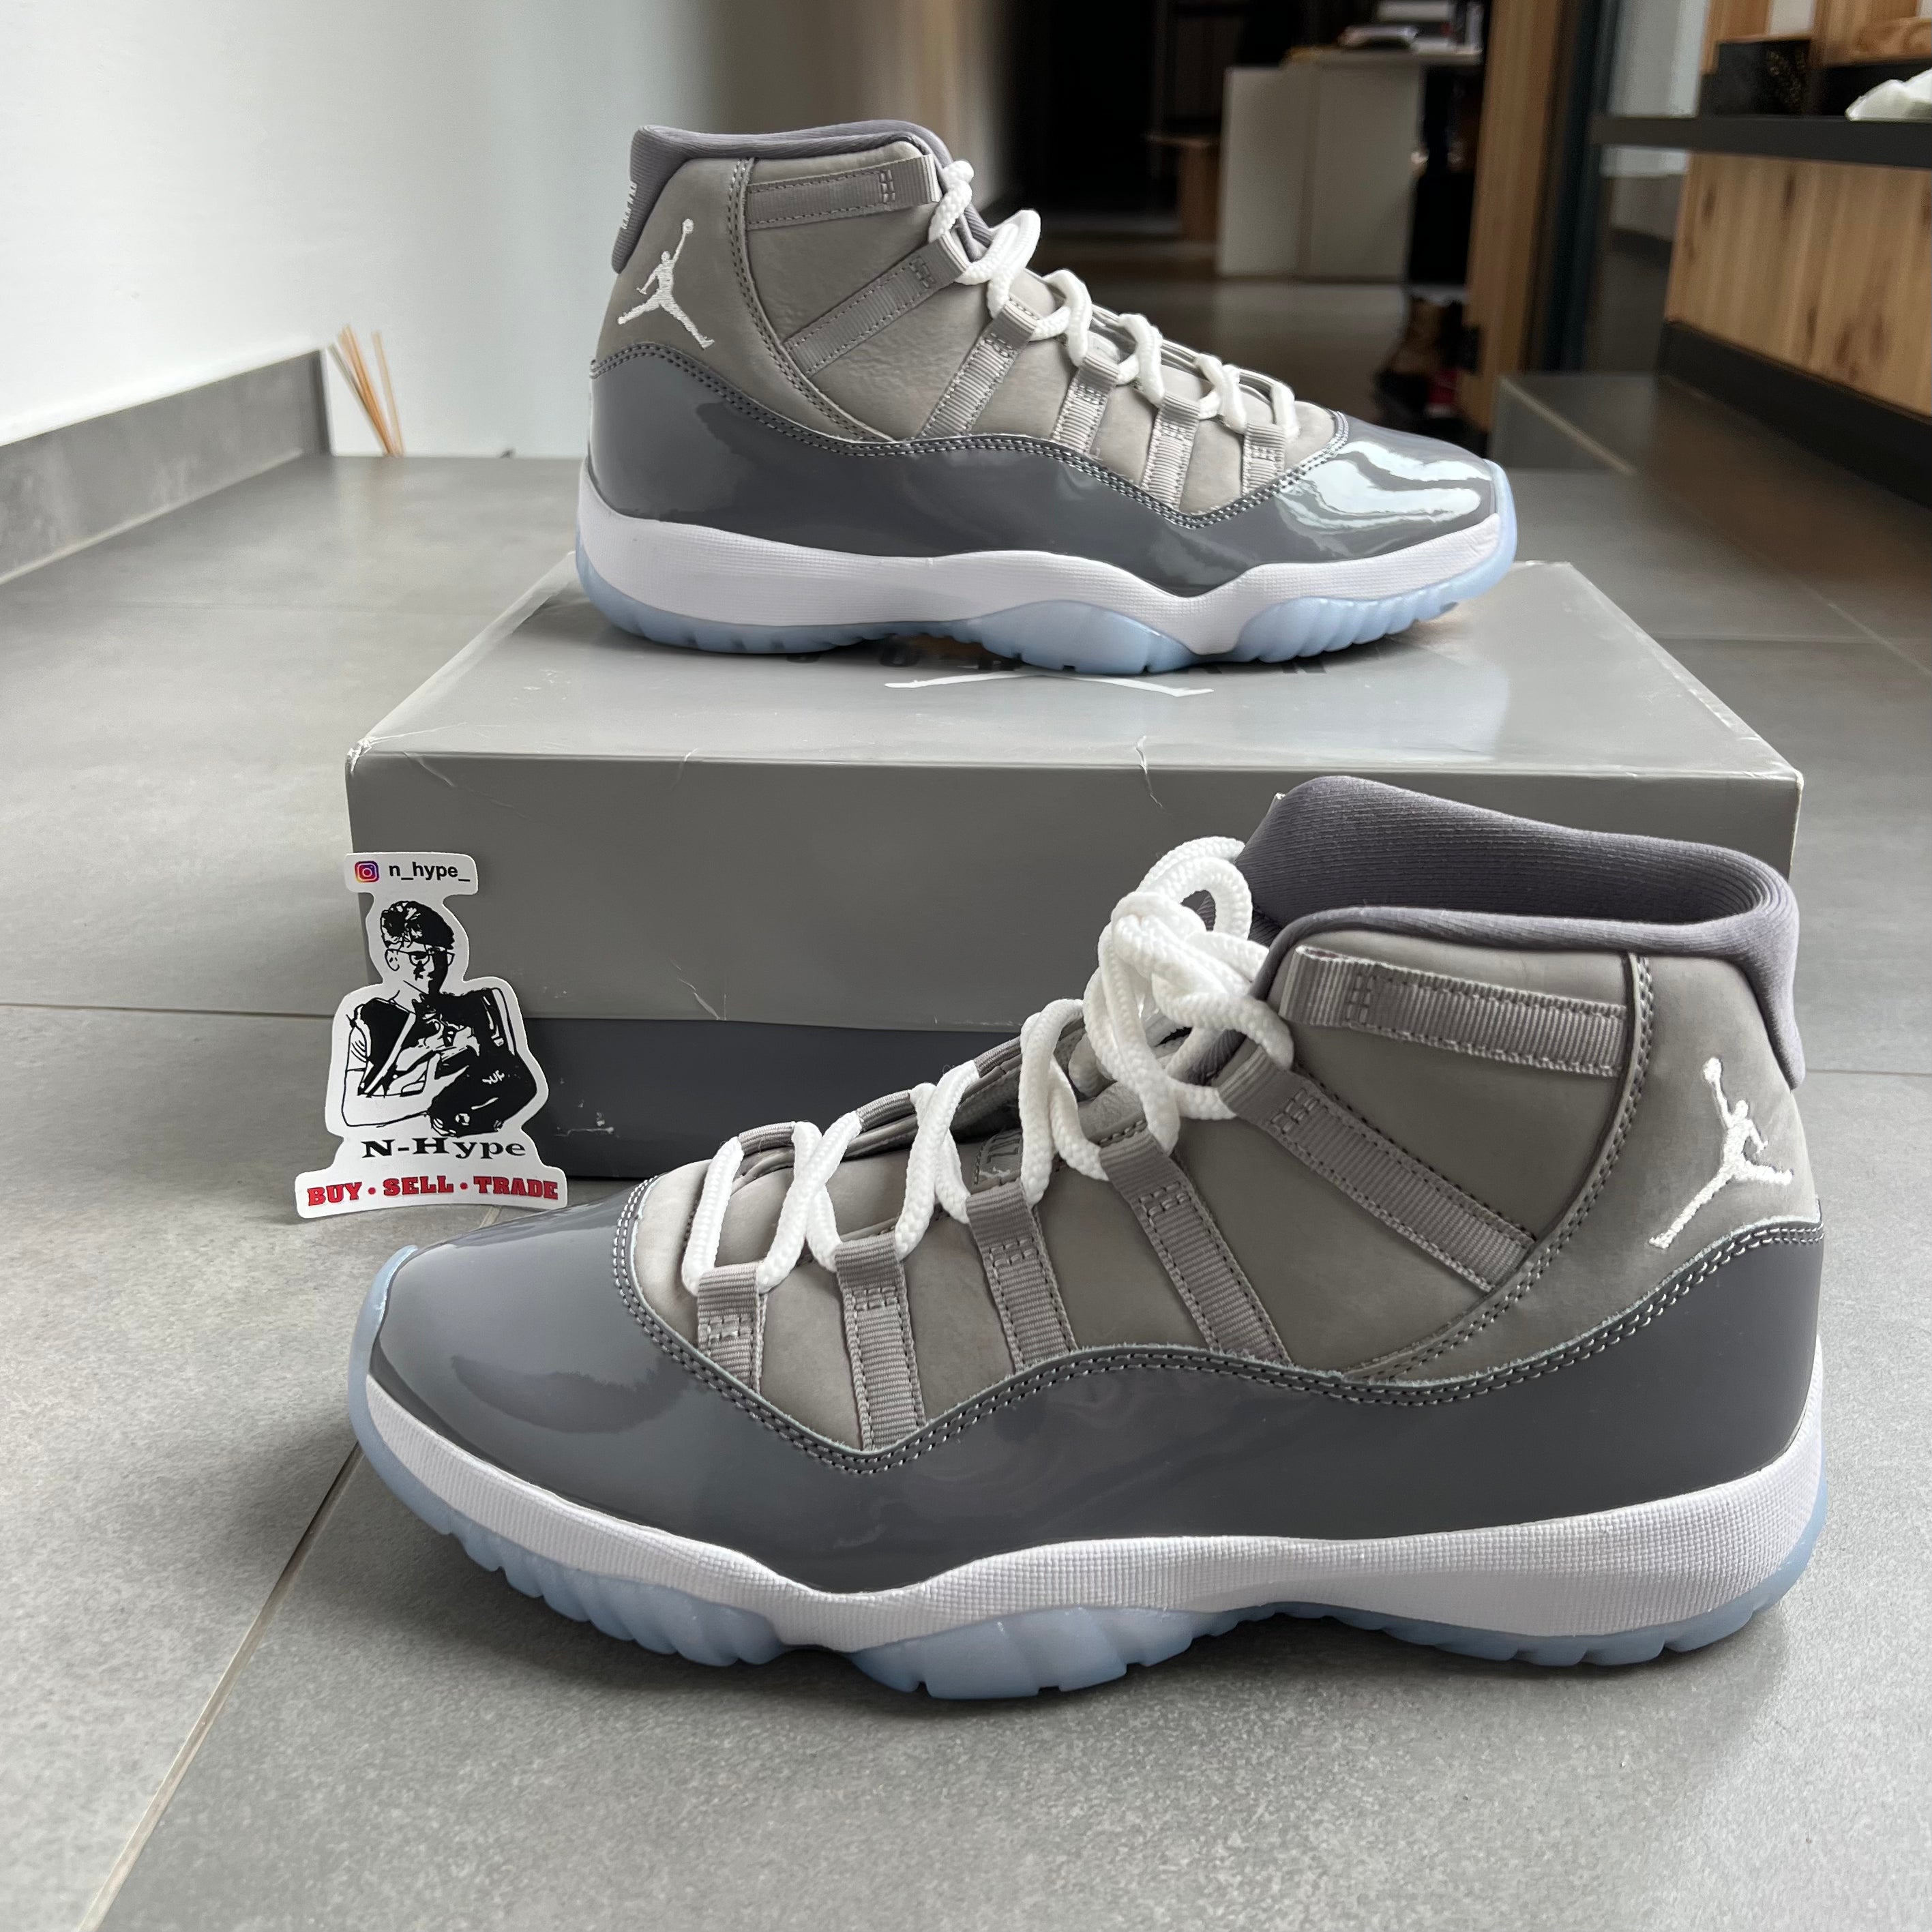 Jordan 11 Retro Cool Gray (2021)